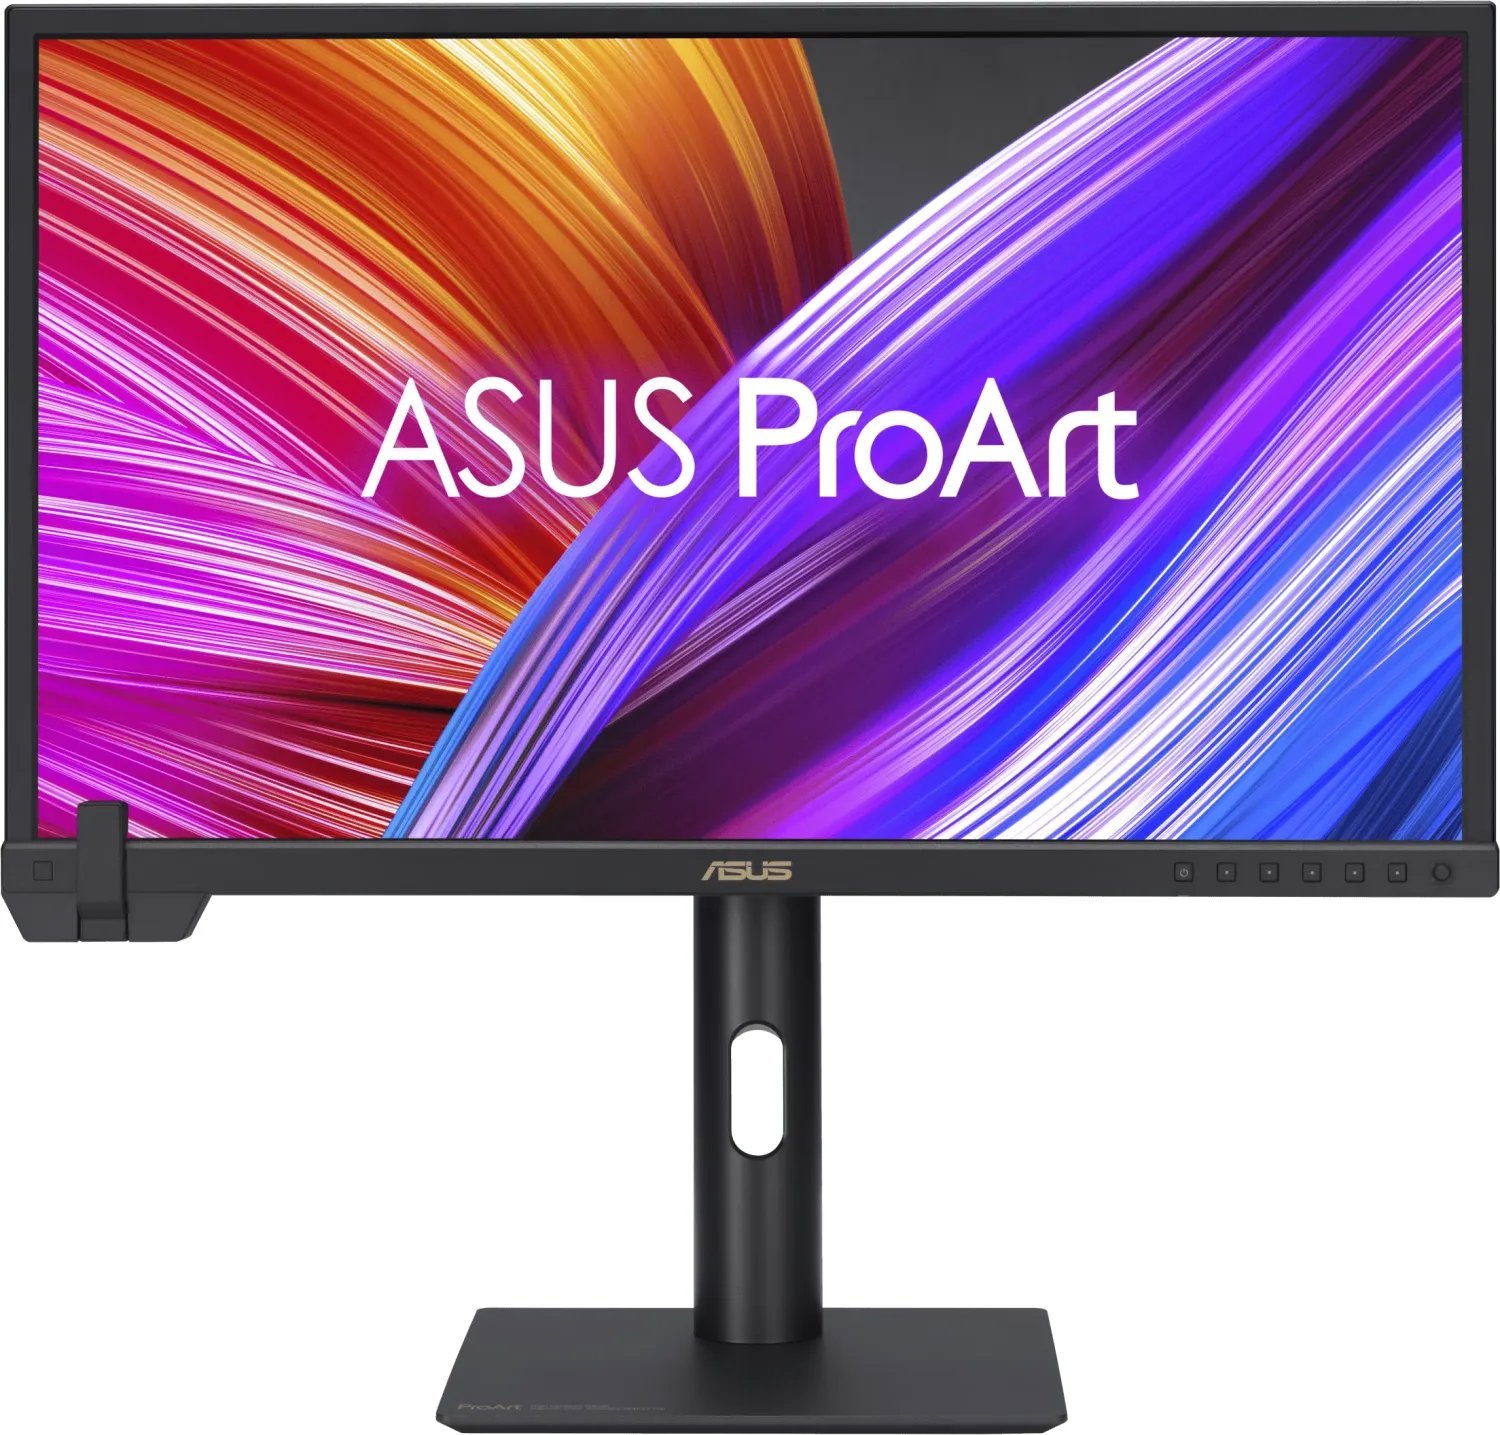 ASUS ProArt PA24US 61.13cm monitors